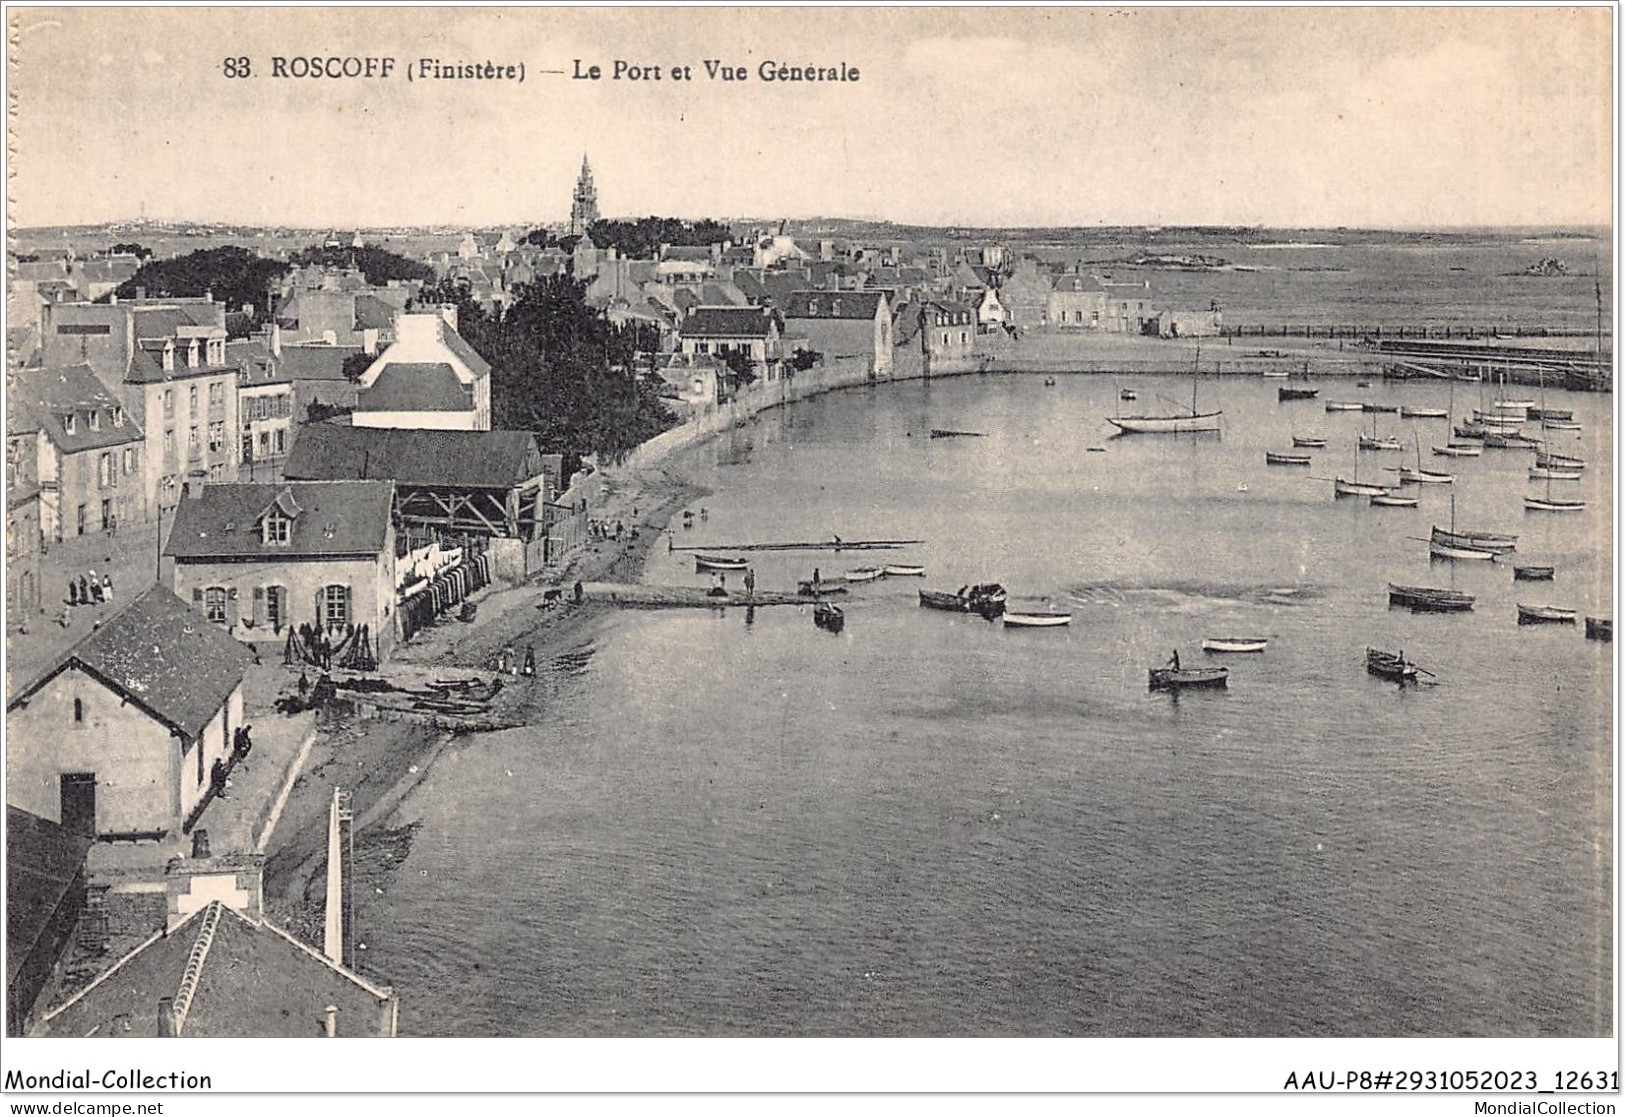 AAUP8-29-0737 - ROSCOFF - Le Port Et Vue Generale - Roscoff